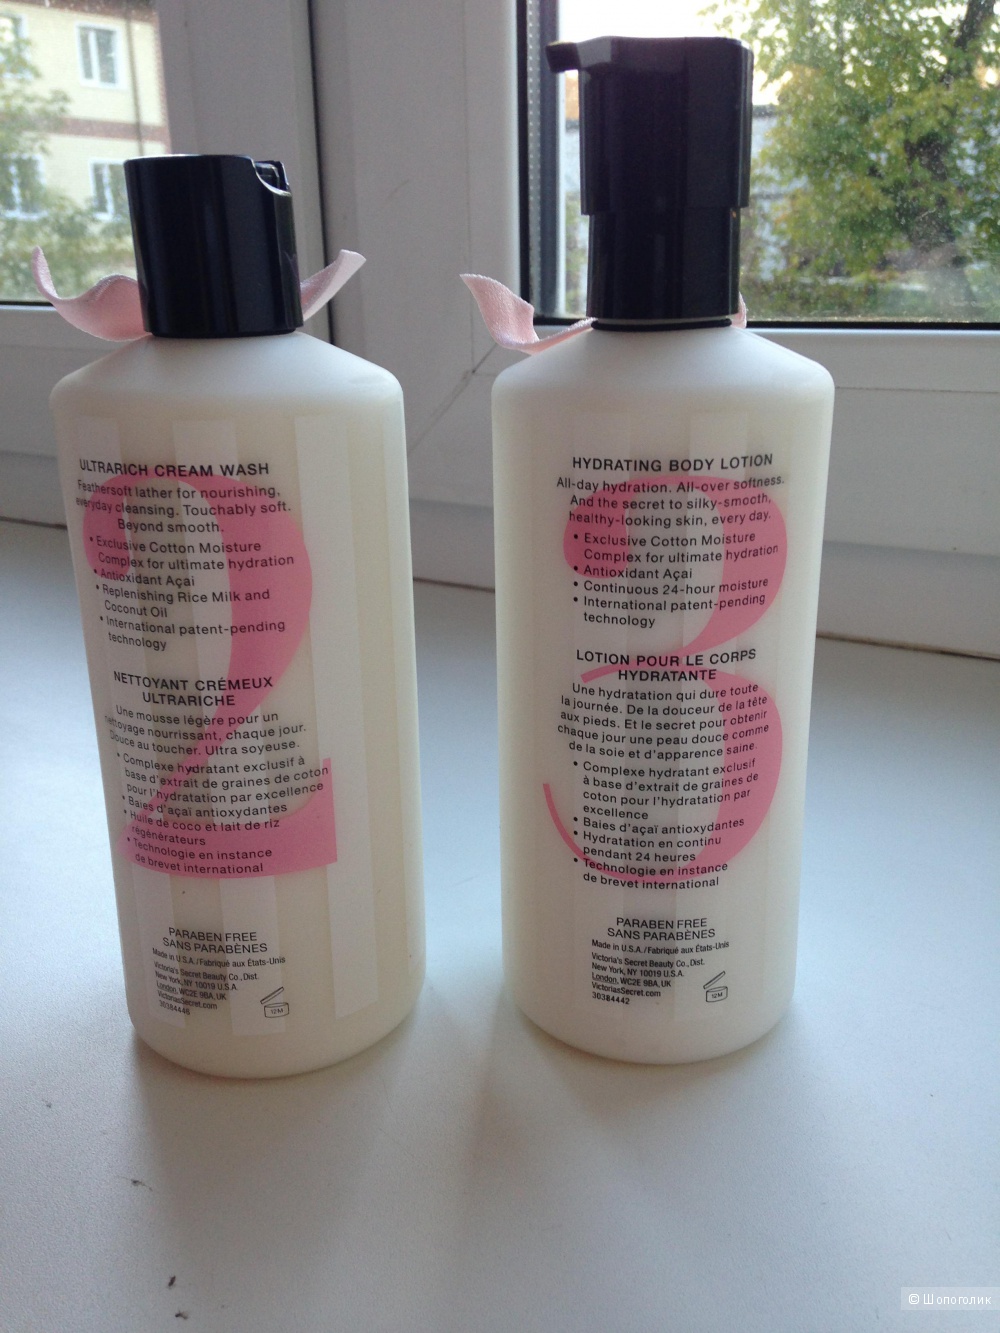 Крем для душа (Açai Ultrarich Cream Wash) и лосьон для тела (Açai Hydrating Body Lotion) Victoria's Secret Body Care